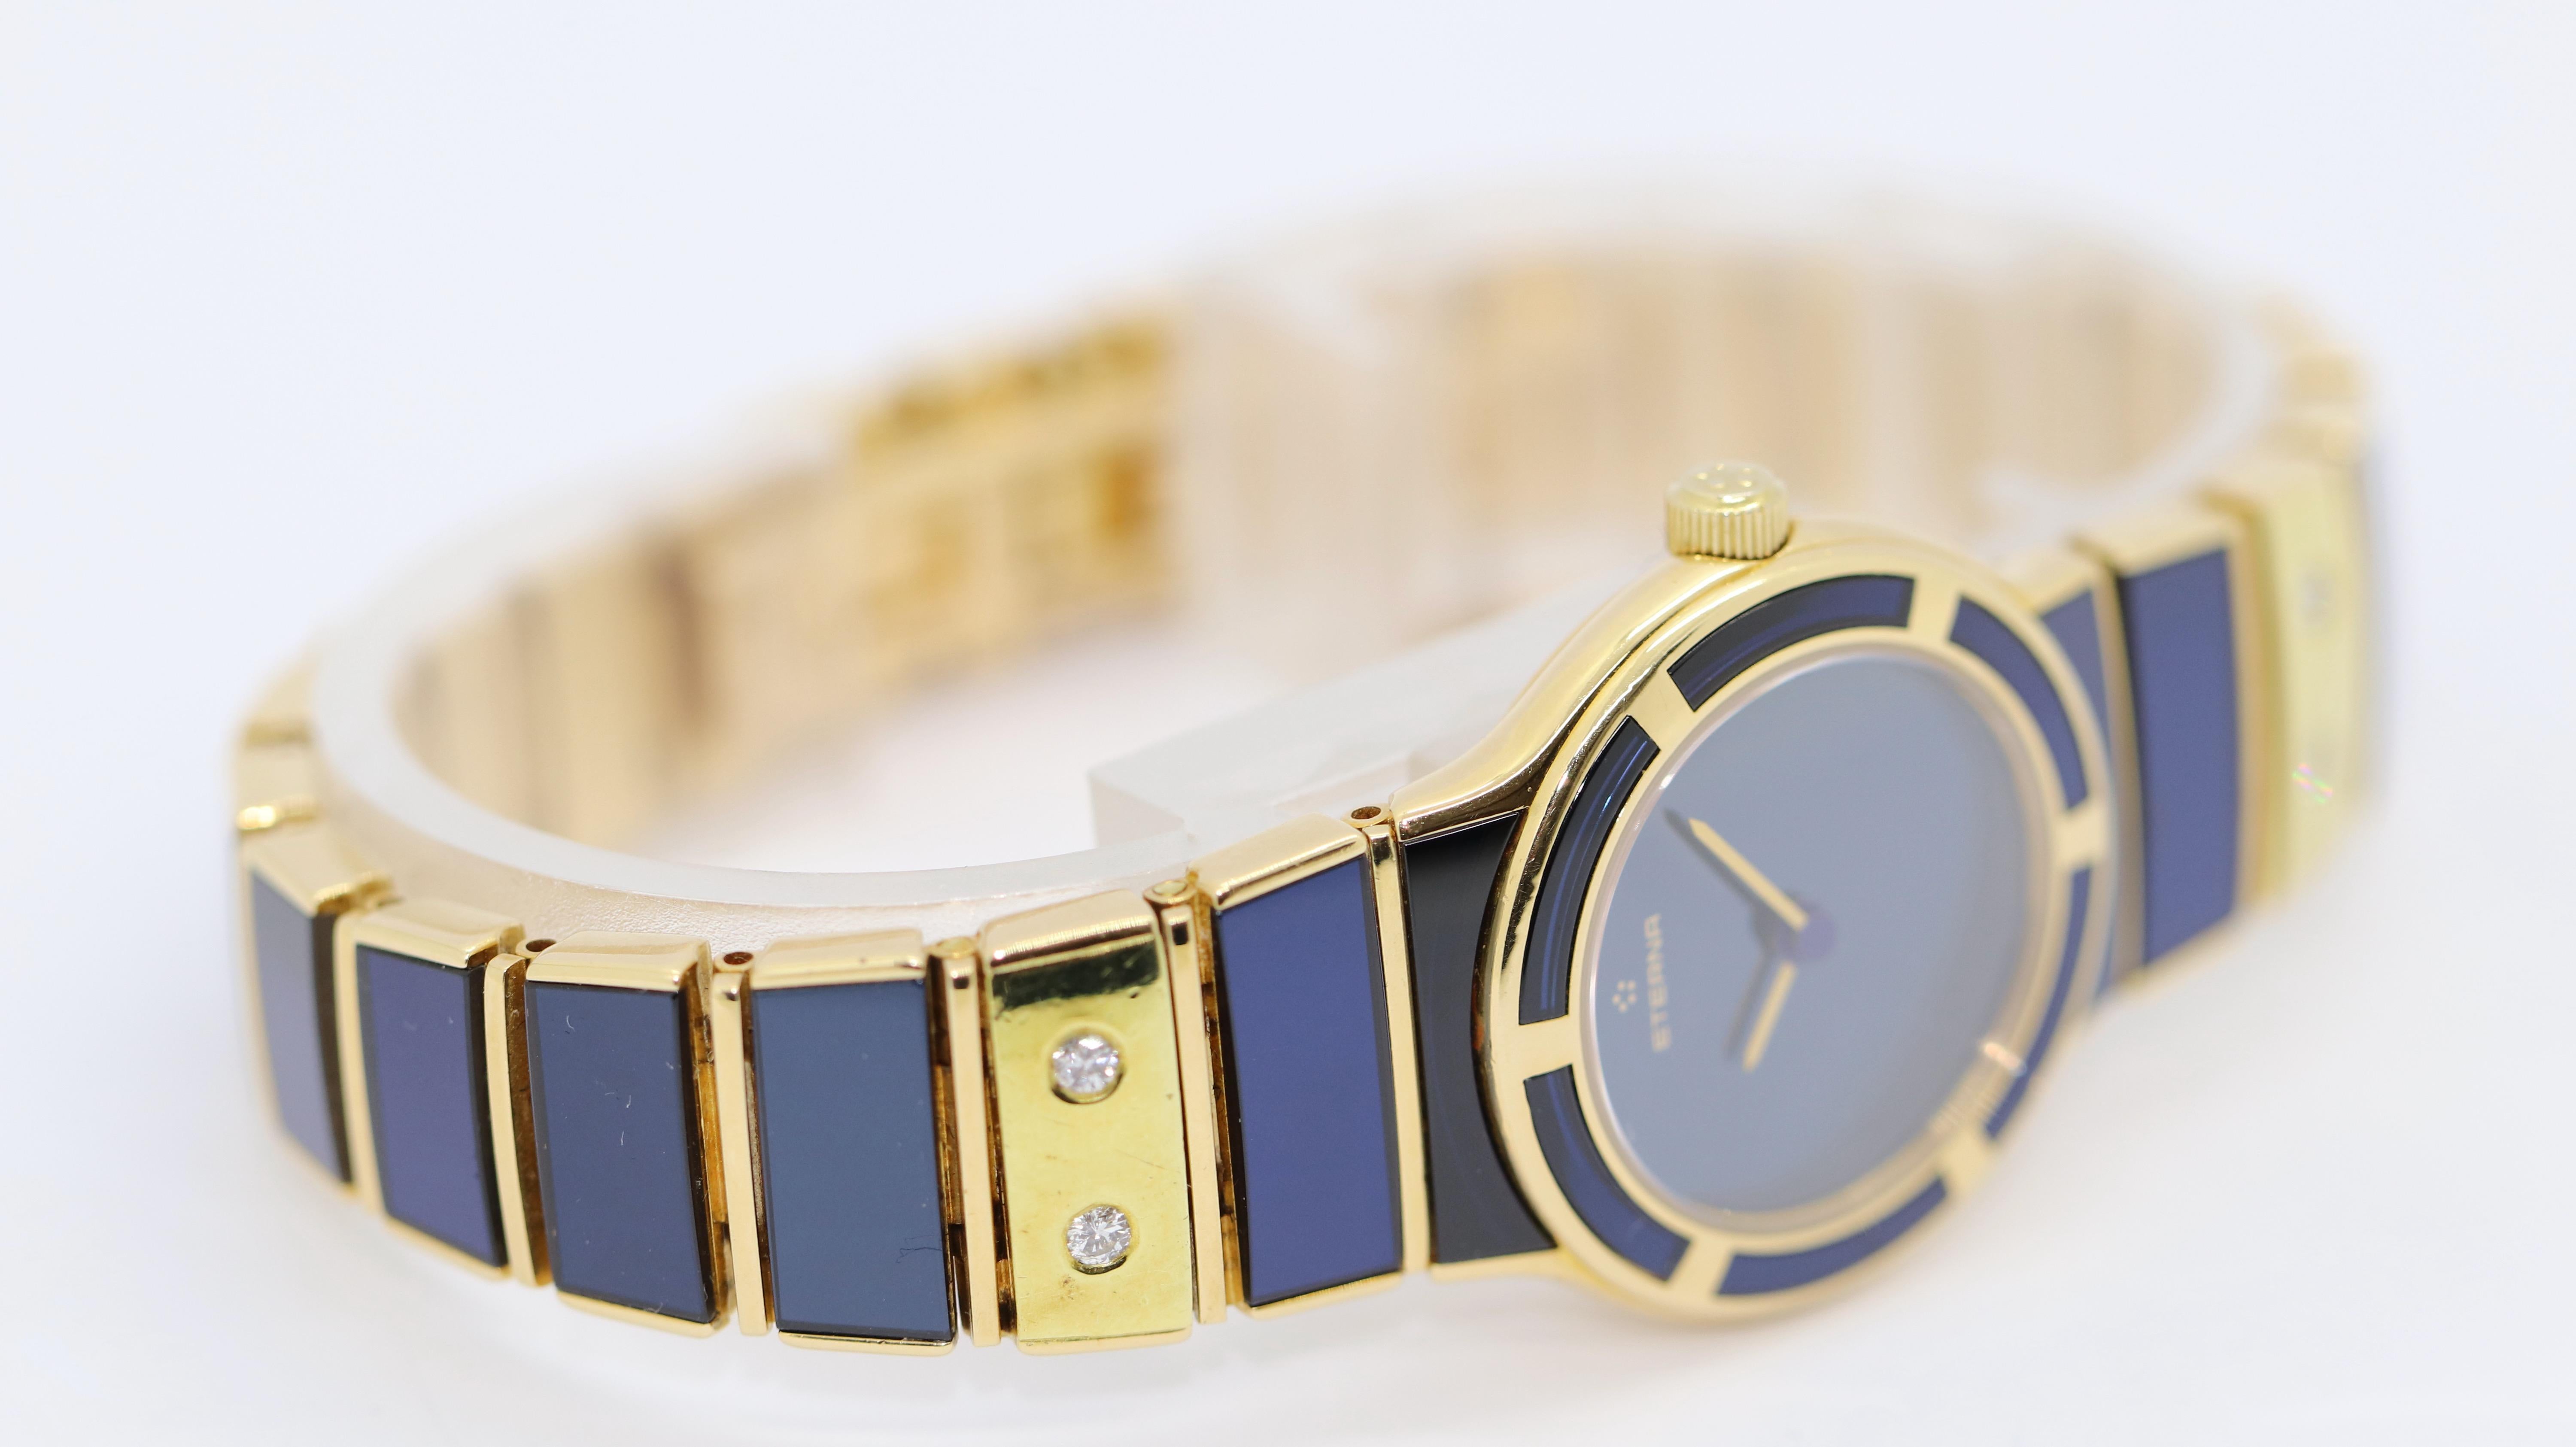 Limited 18 Karat Gold Ladies Wrist Watch by Eterna, Model Galaxis, Number 007 In Good Condition For Sale In Berlin, DE